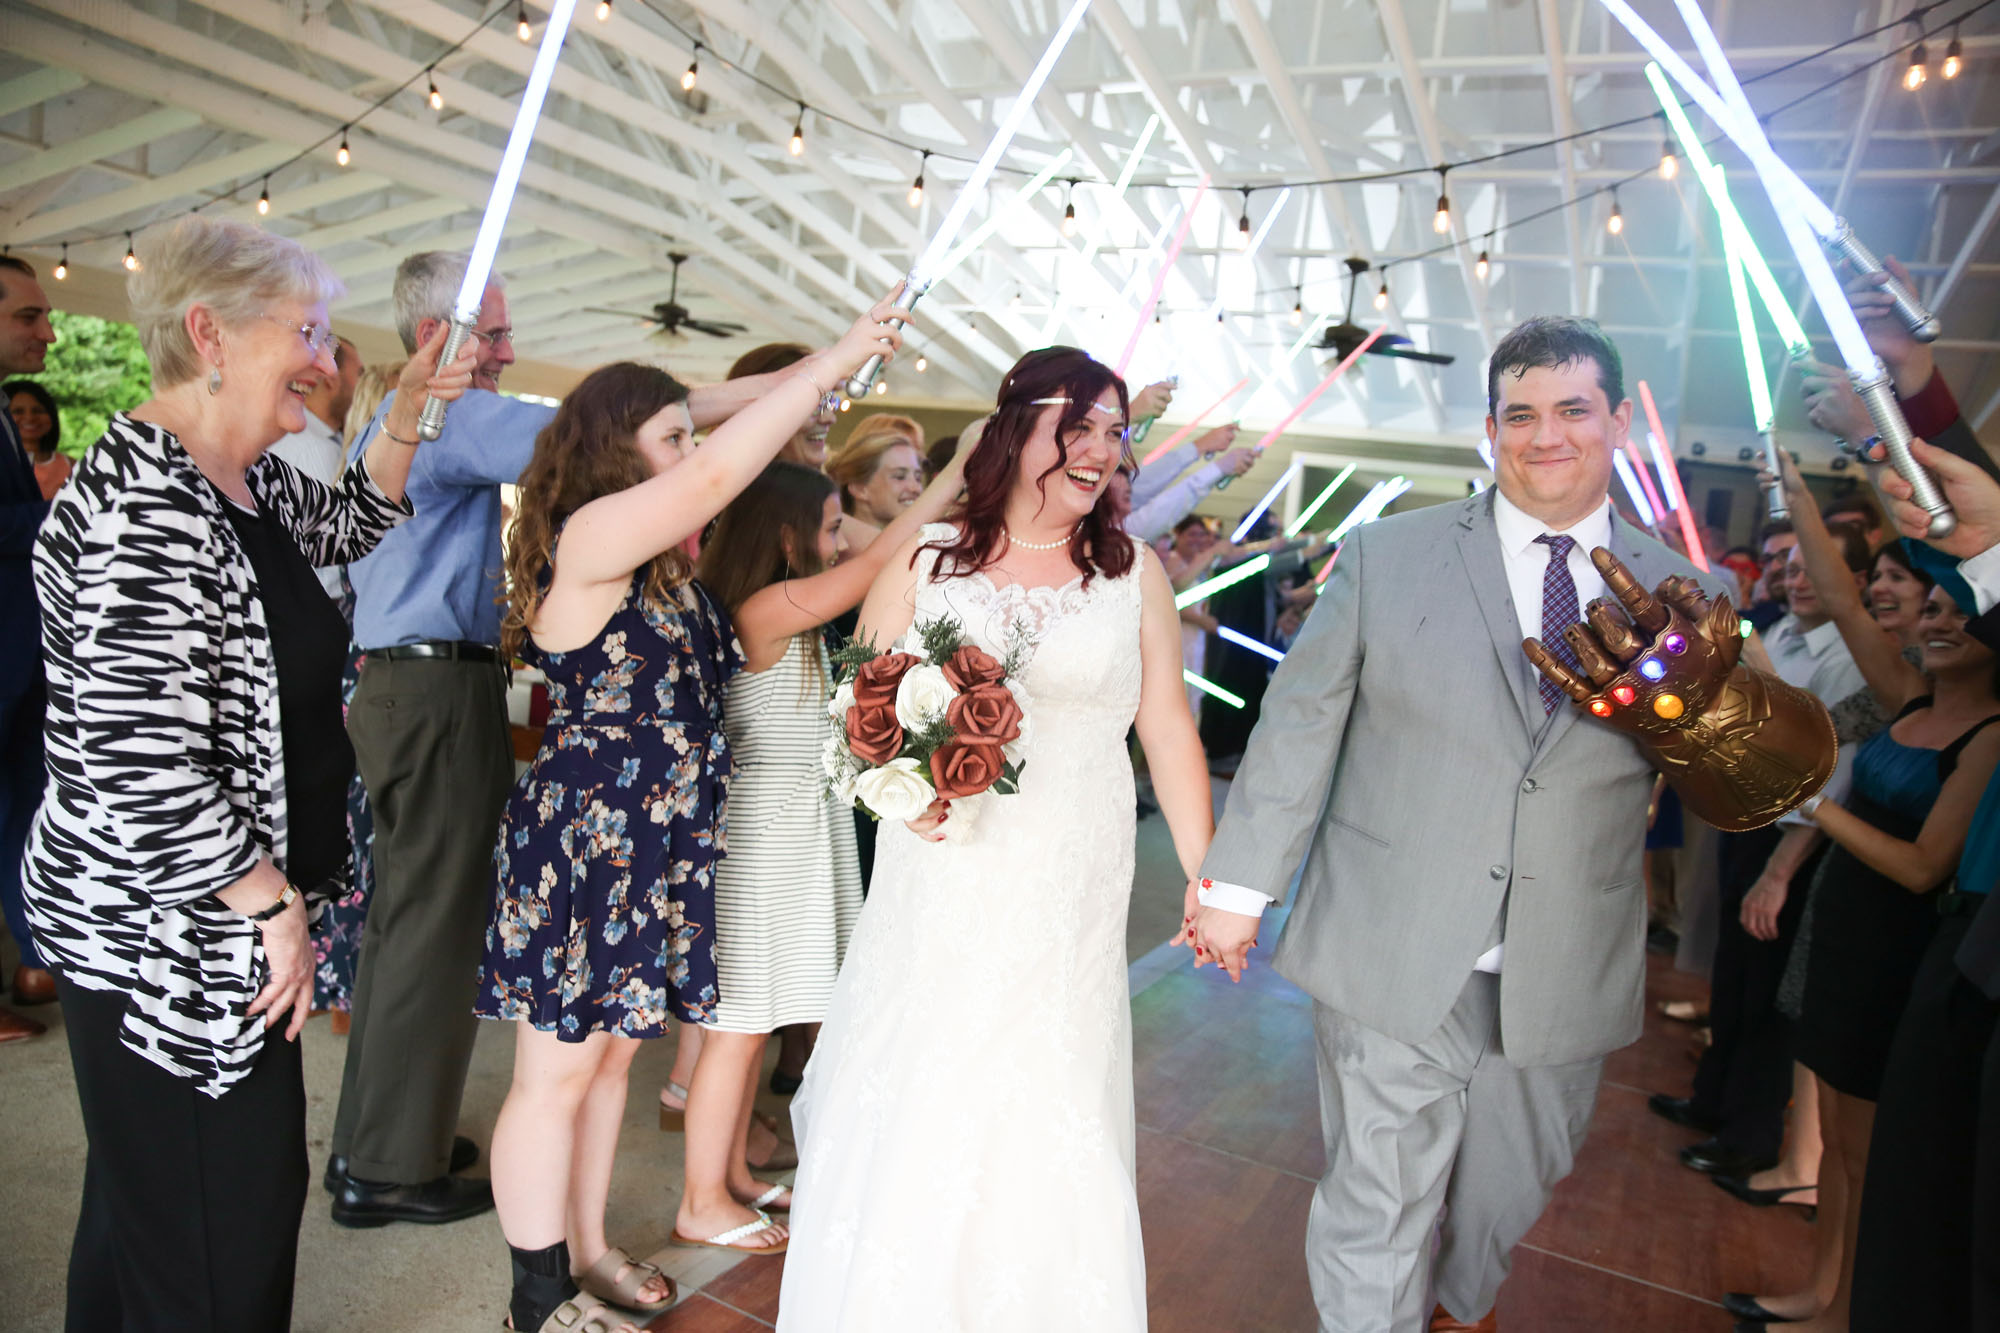  5/4/19  Charlottesville, VA  - Jacki and Andrew Wedding at James Monroe's Highland

Photo credit: Amanda Maglione 